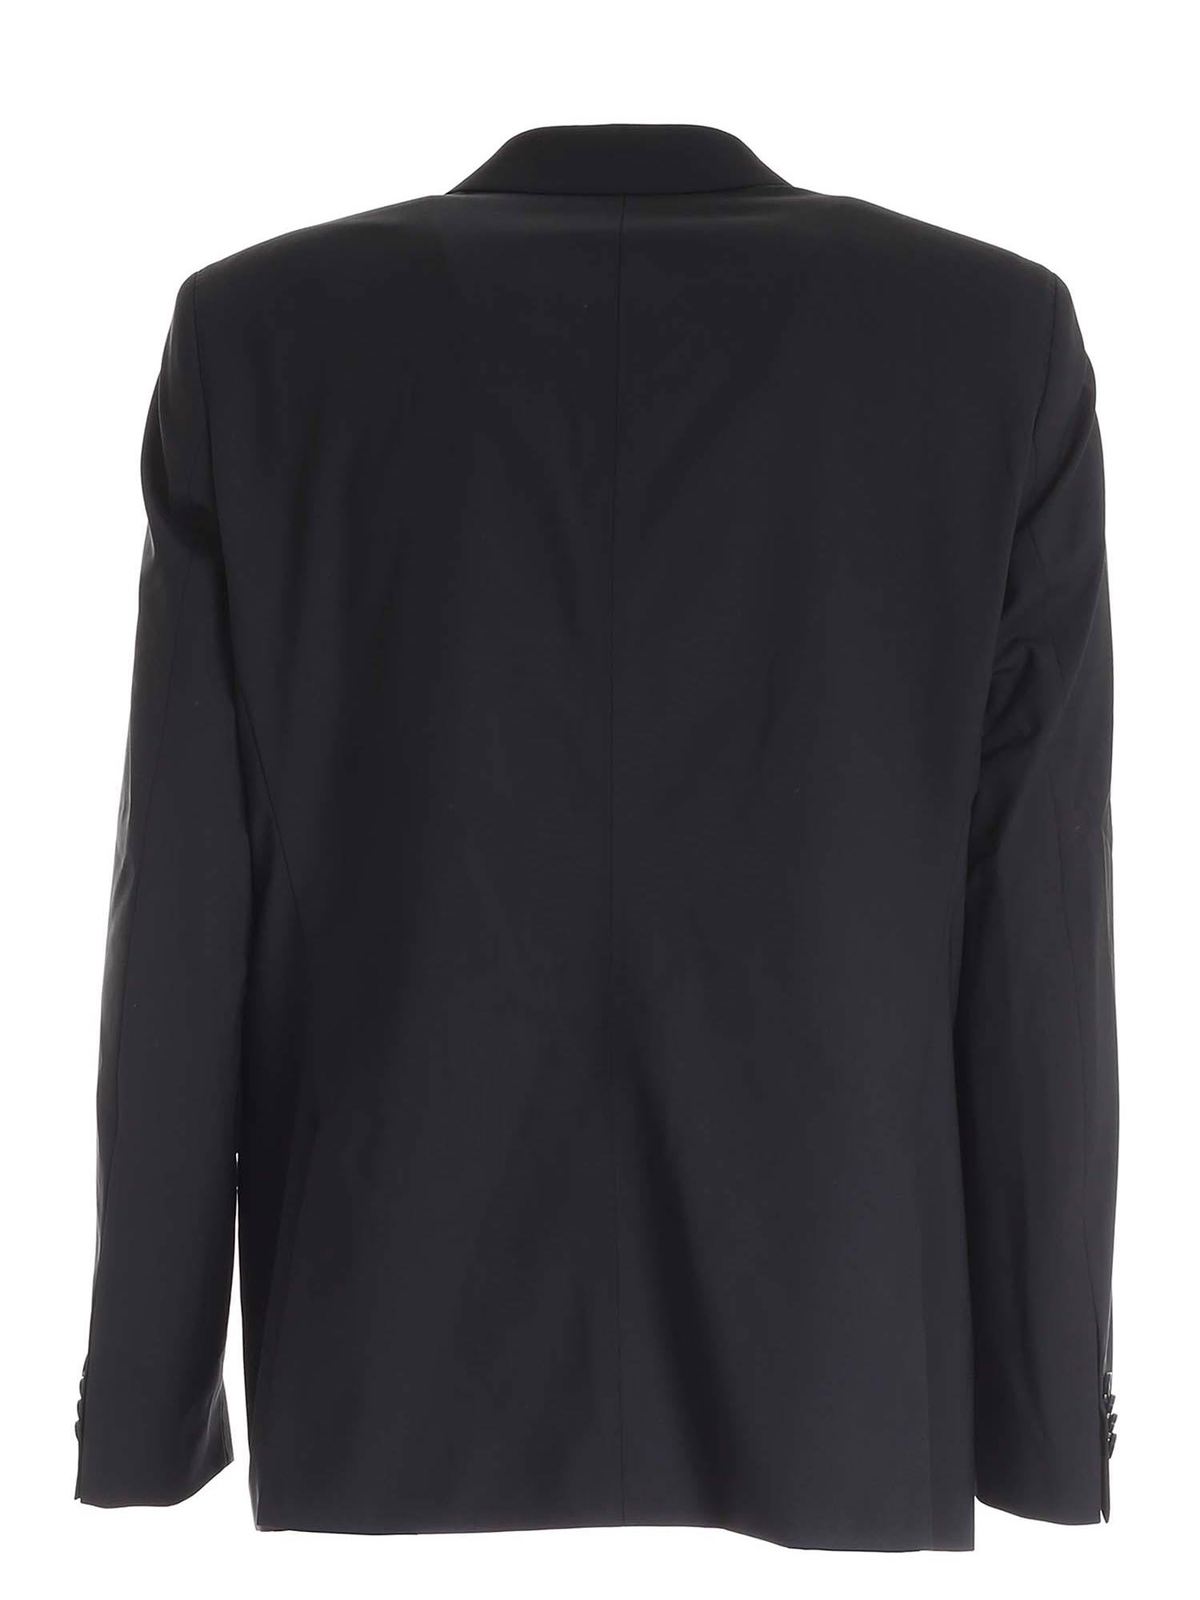 Blazers Karl Lagerfeld - Two-buttons jacket in black - 155200500099990